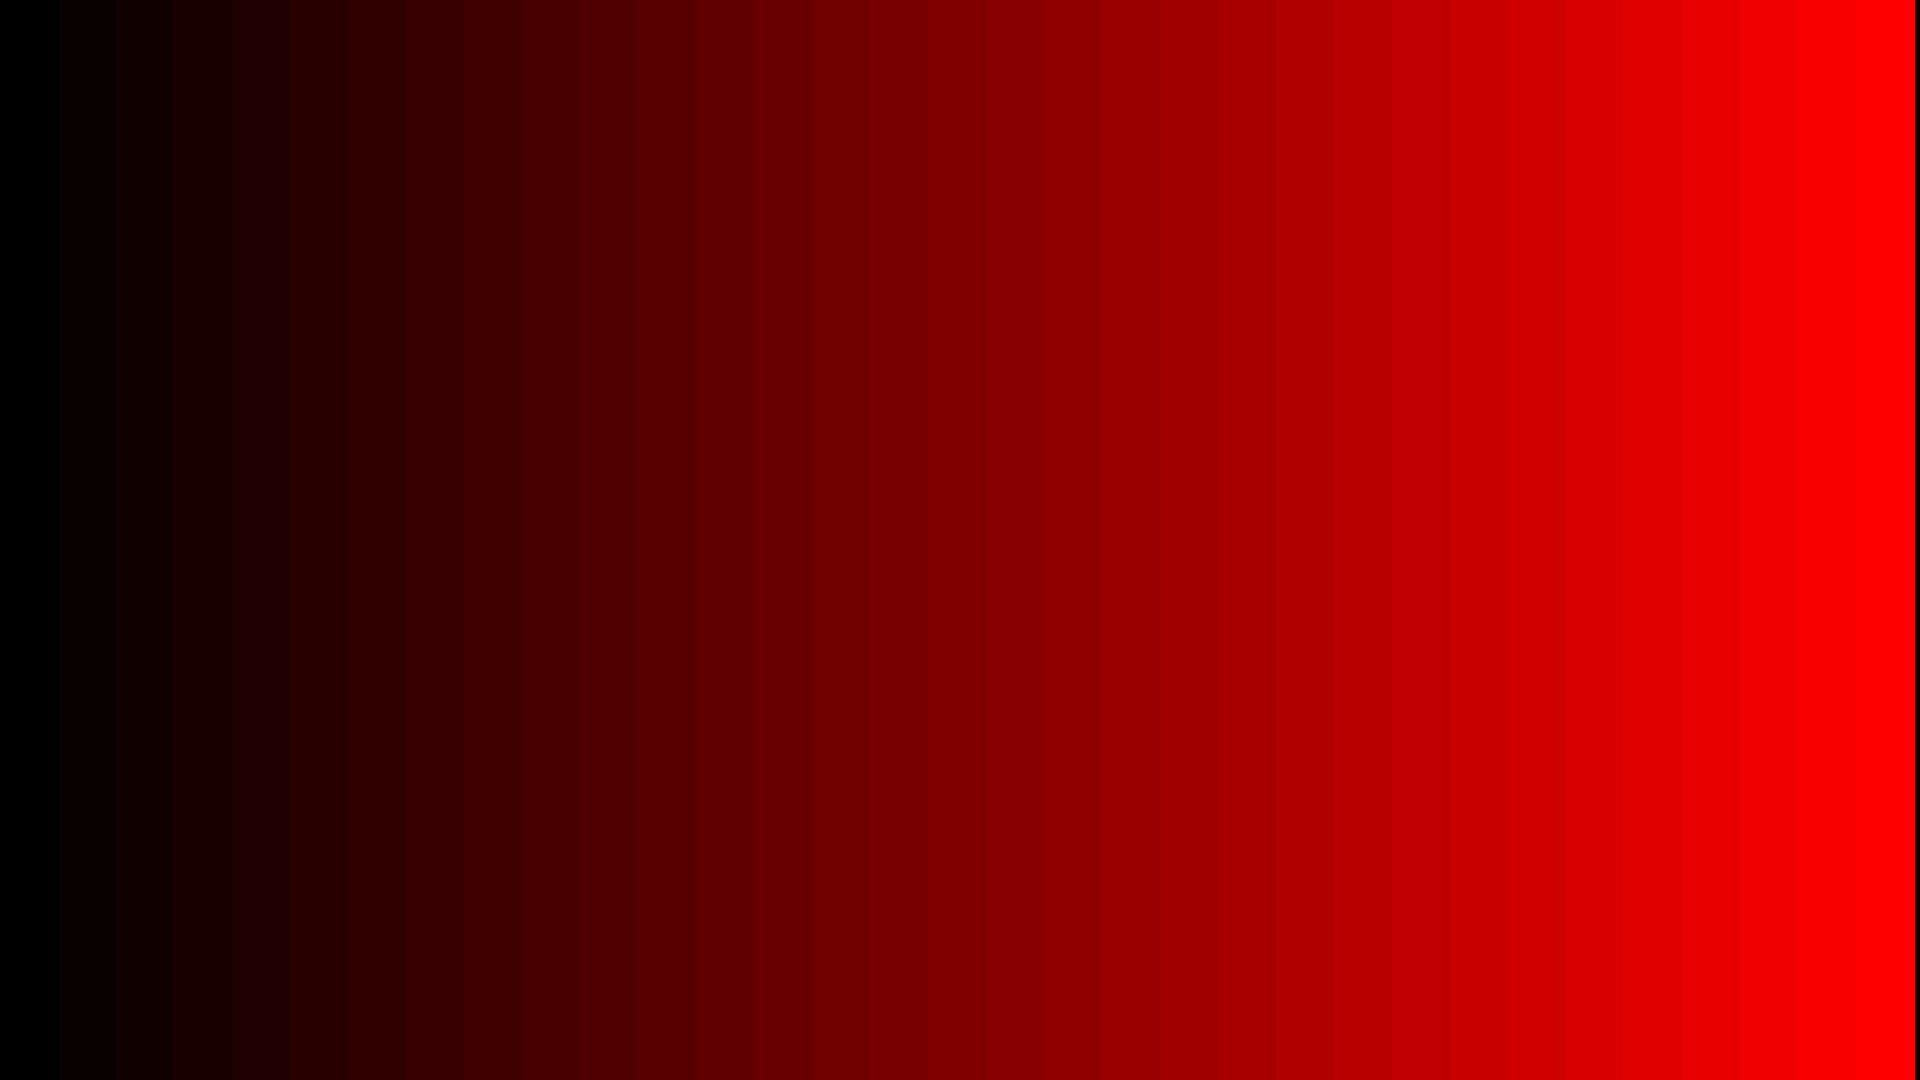  Pastel Red Gradient Background Wallpaper  CBEditz